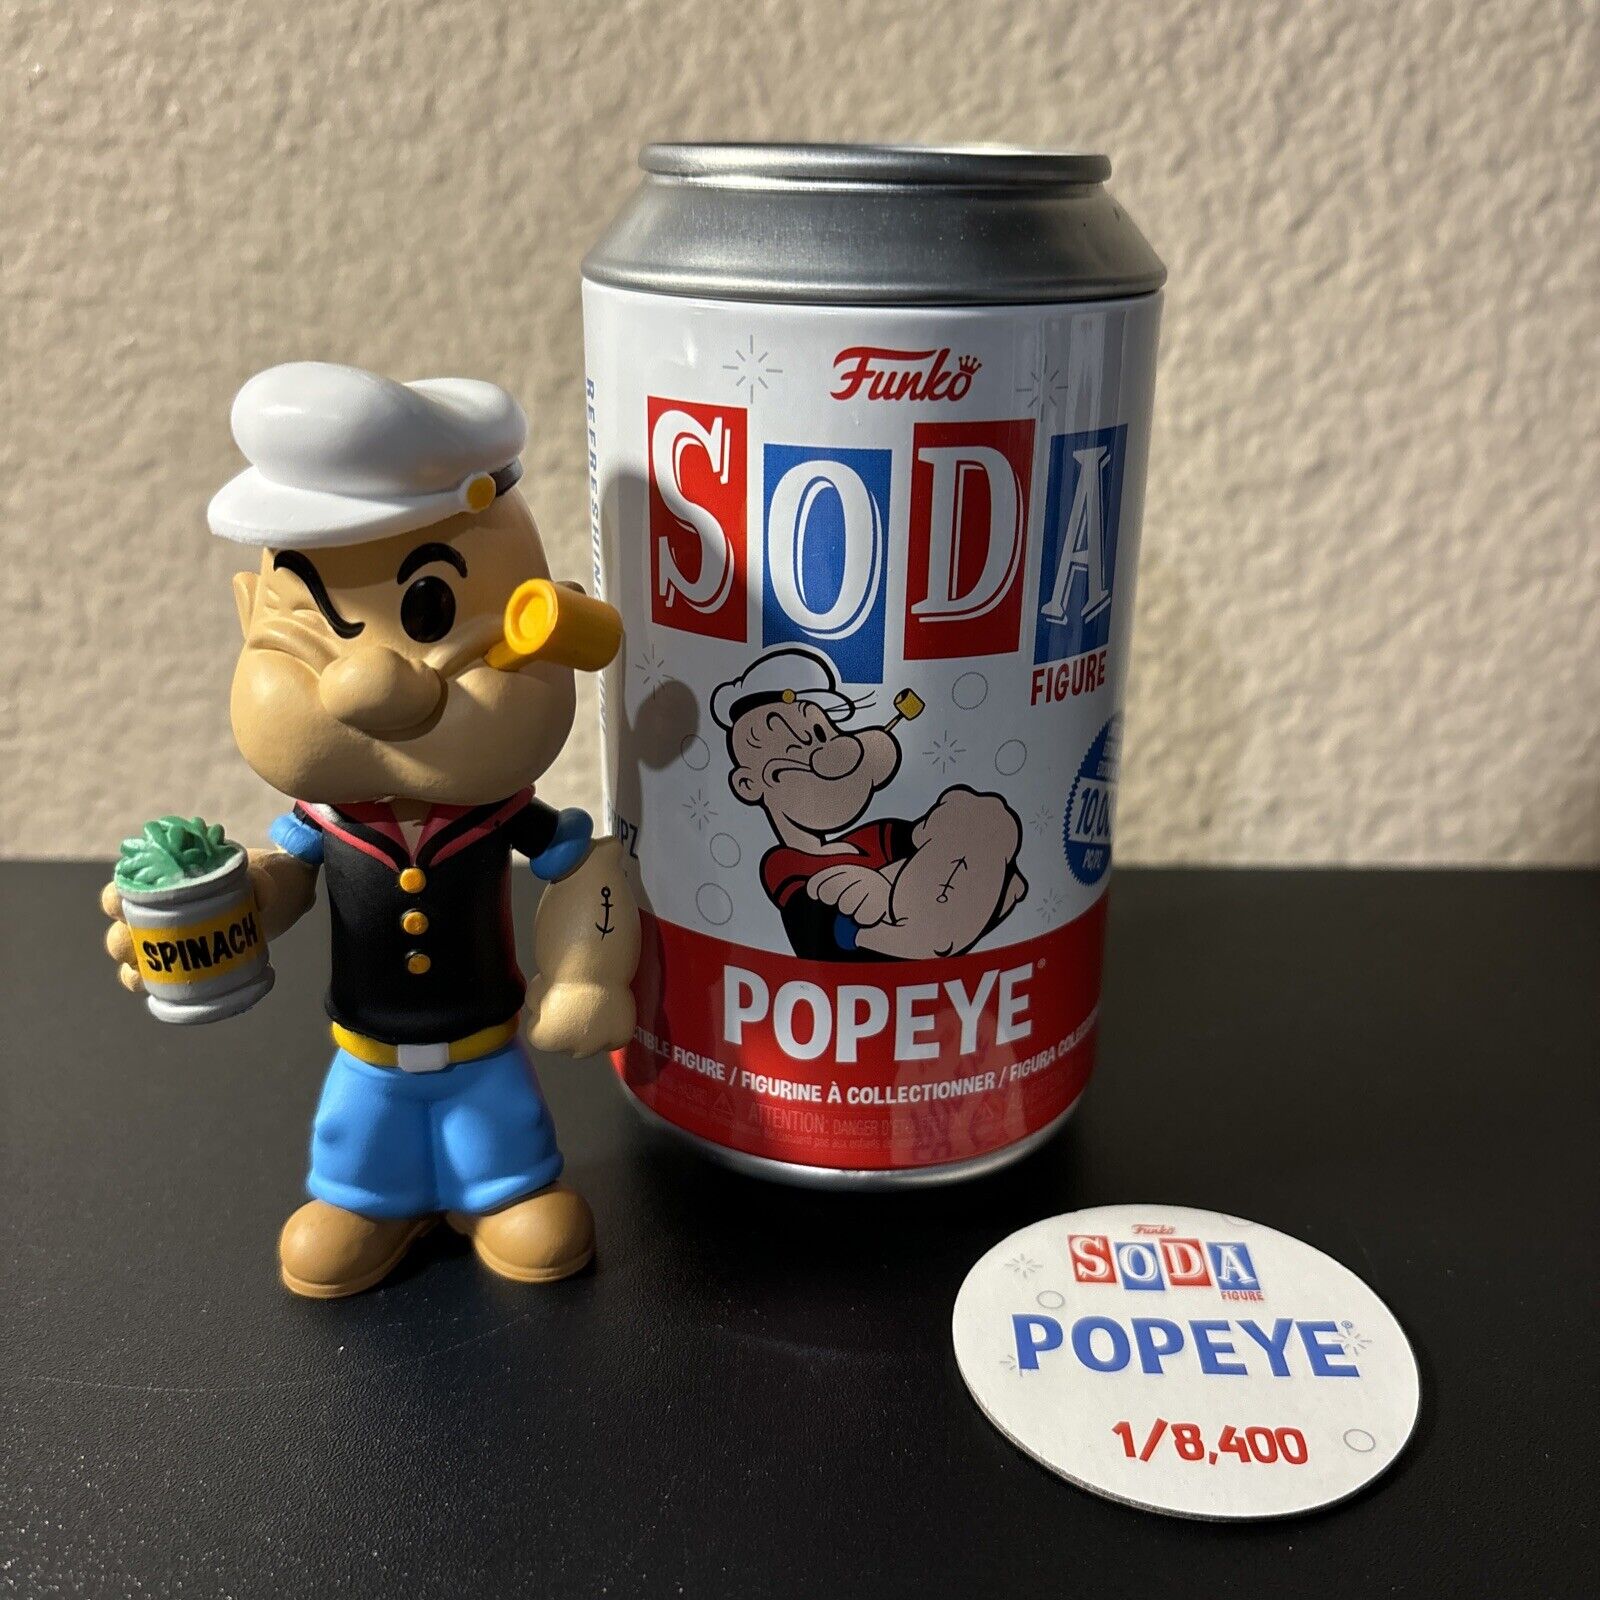 Funko Soda: Popeye (Common - 1/8,400)